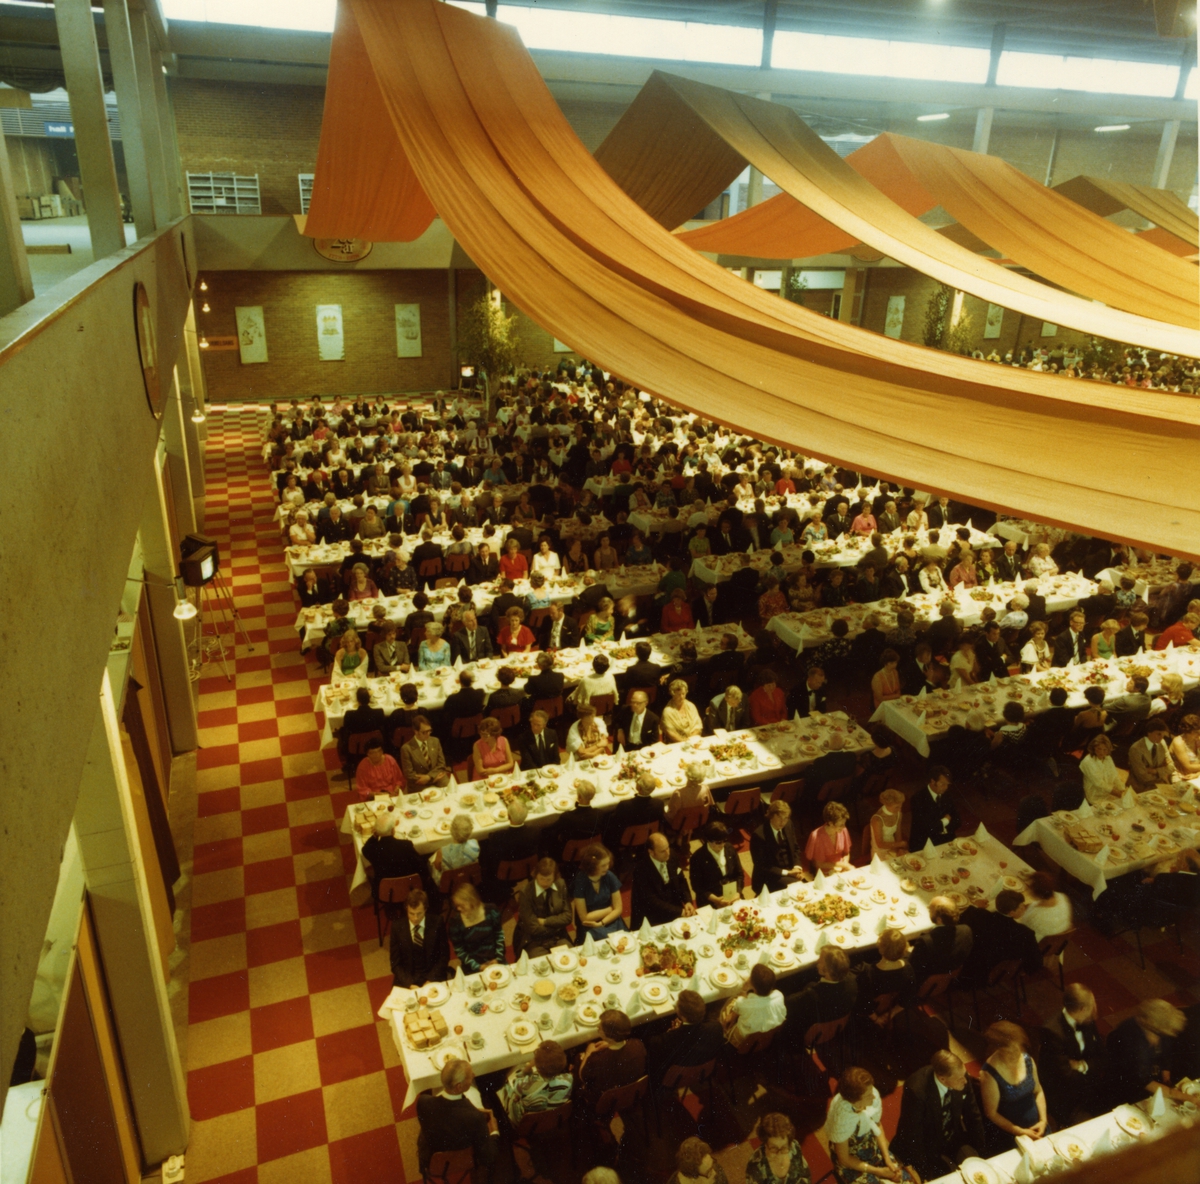 Tiedemanns Tobaksfabriks 200-årsjubileum i 1978.